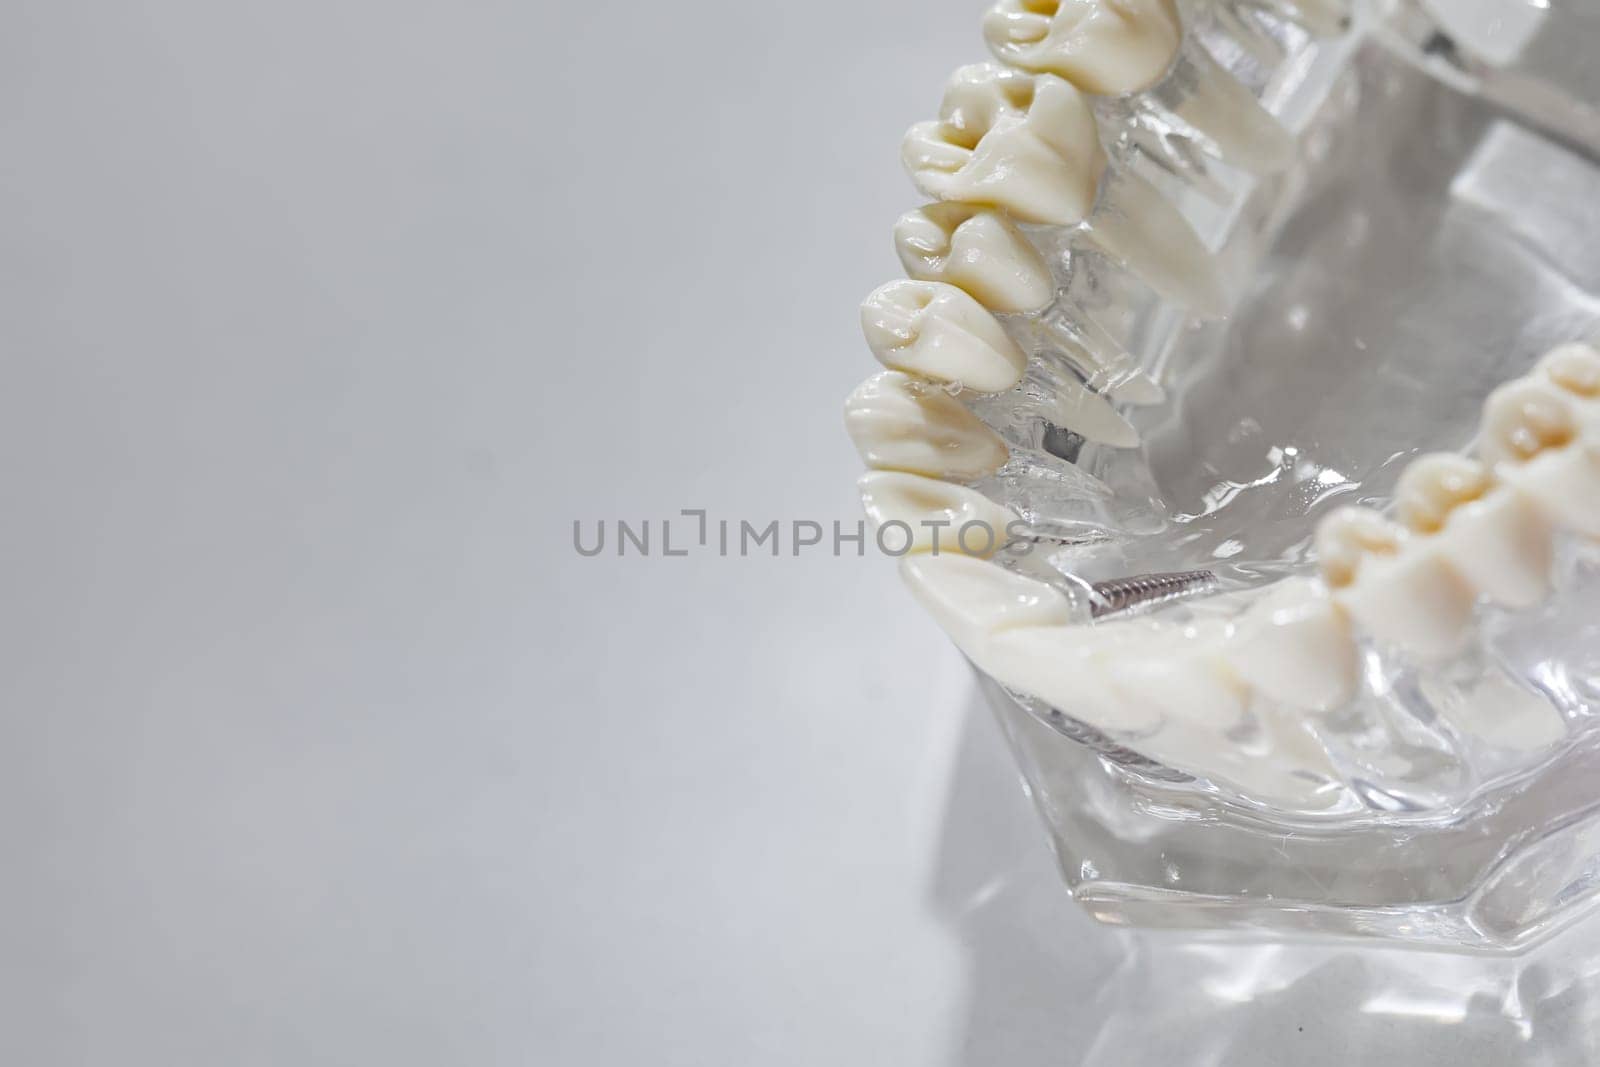 Teeth education model. Shallow dof by sarymsakov